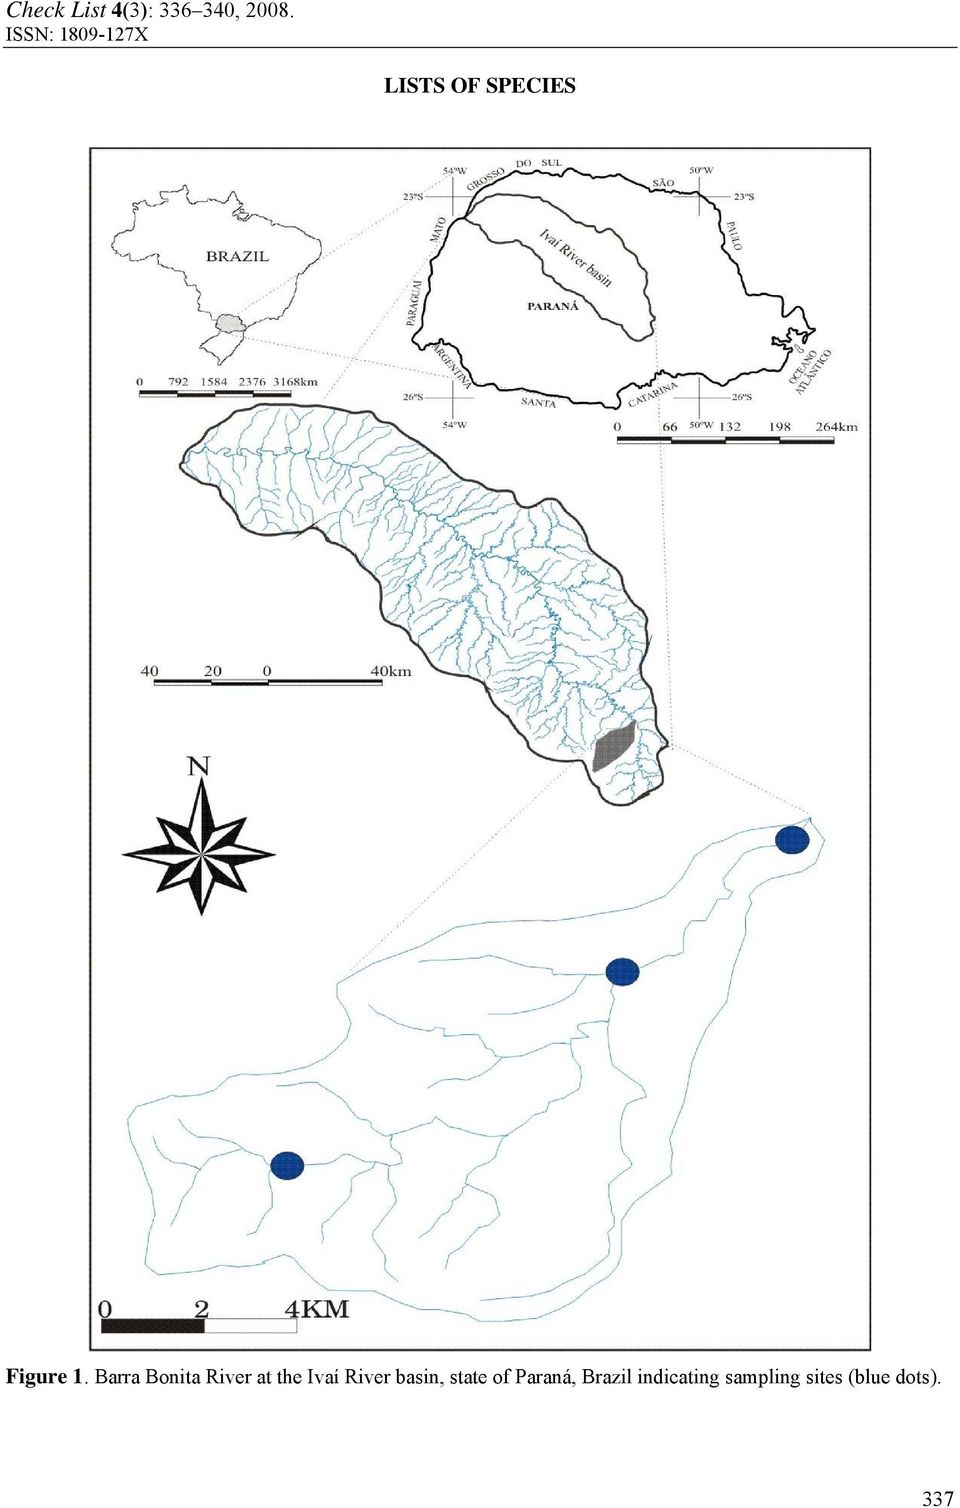 Ivaí River basin, state of